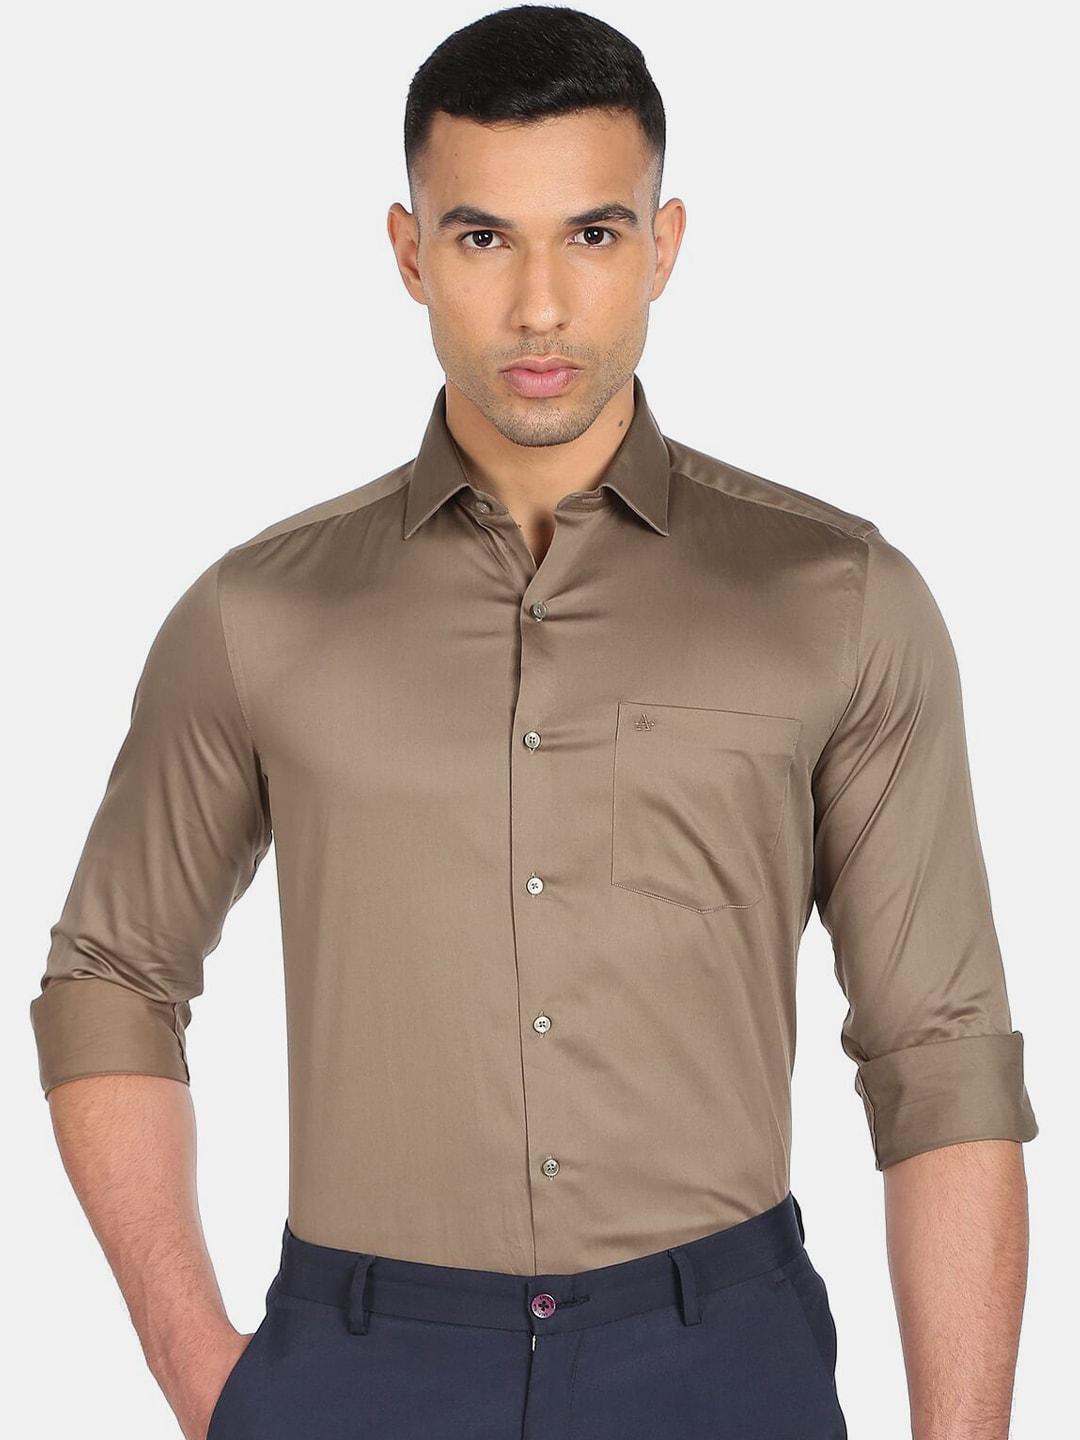 arrow-men-brown-solid-pure-cotton-casual-shirt